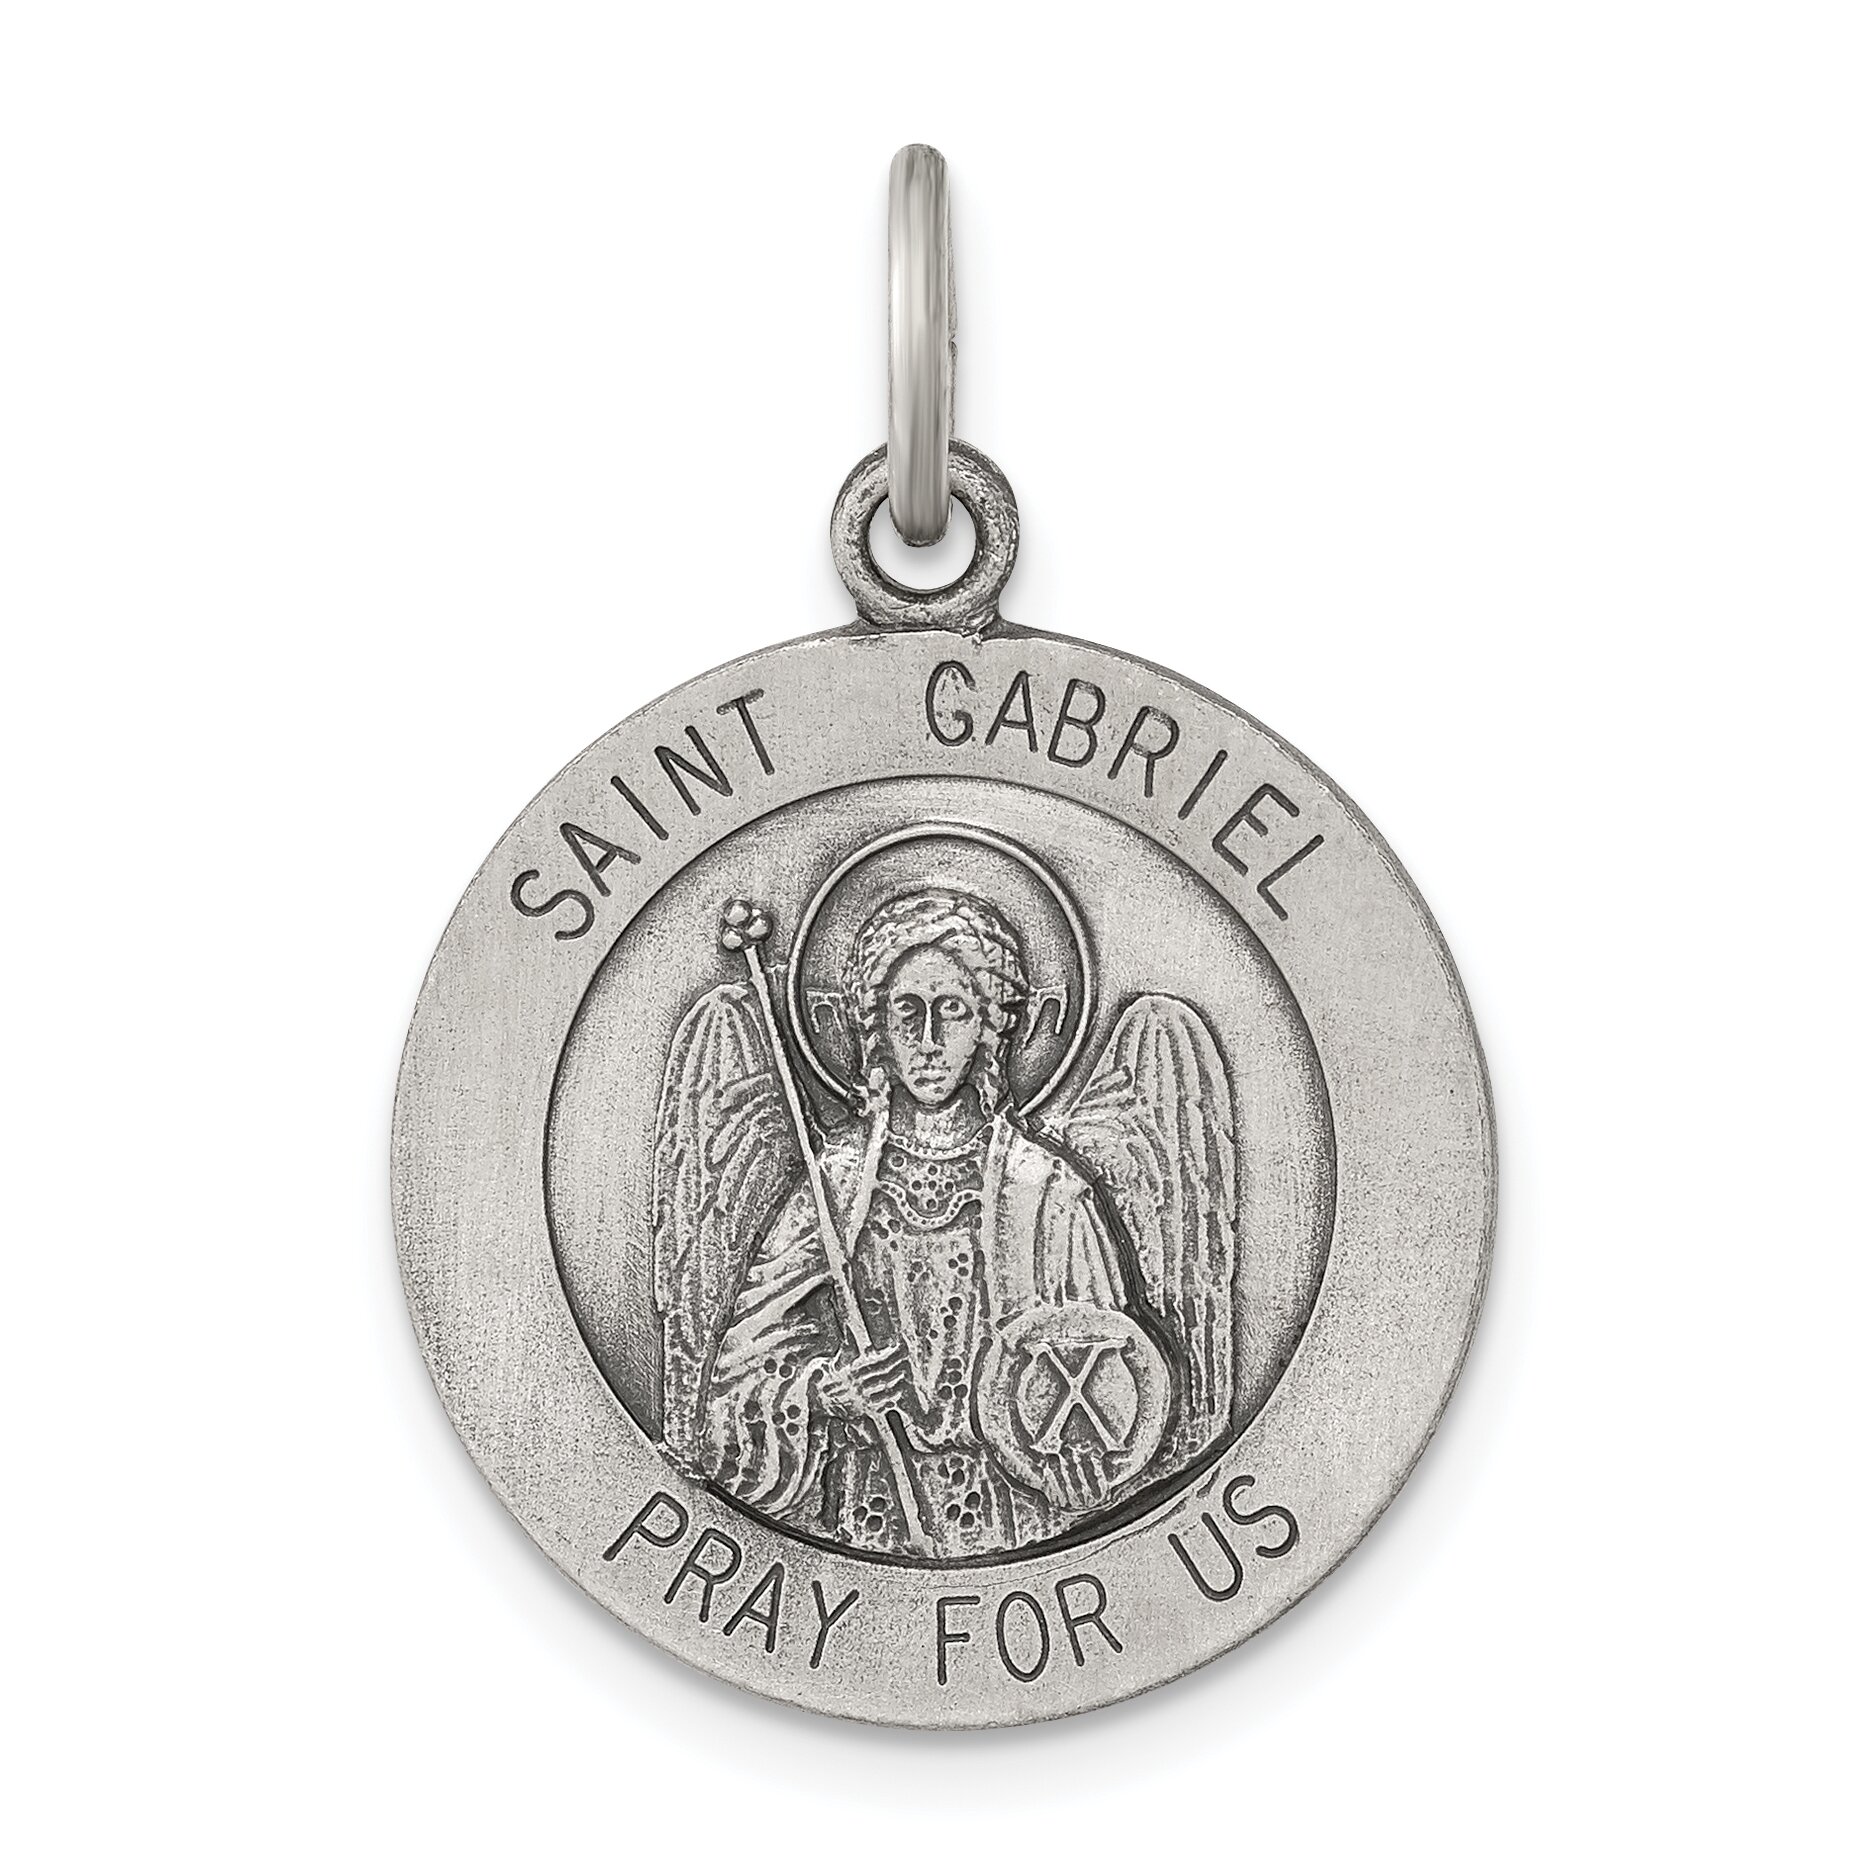 Findingking Sterling Silver Saint Gabriel Medal